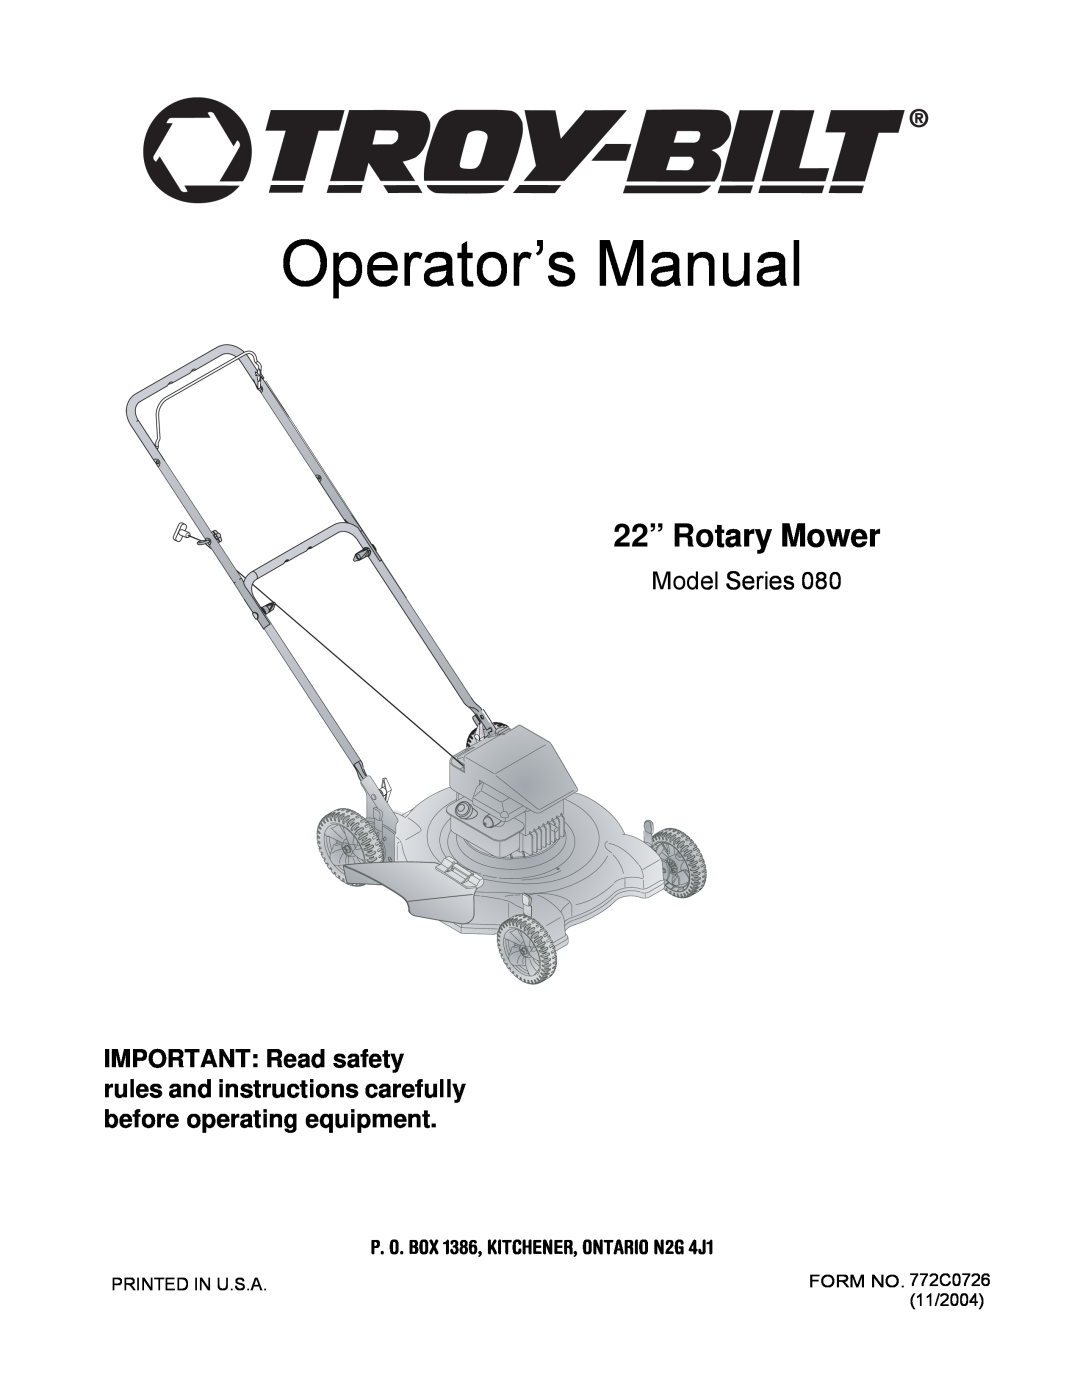 Troy-Bilt 80 manual P. O. BOX 1386, KITCHENER, ONTARIO N2G 4J1, Operator’s Manual, 22” Rotary Mower, Model Series 